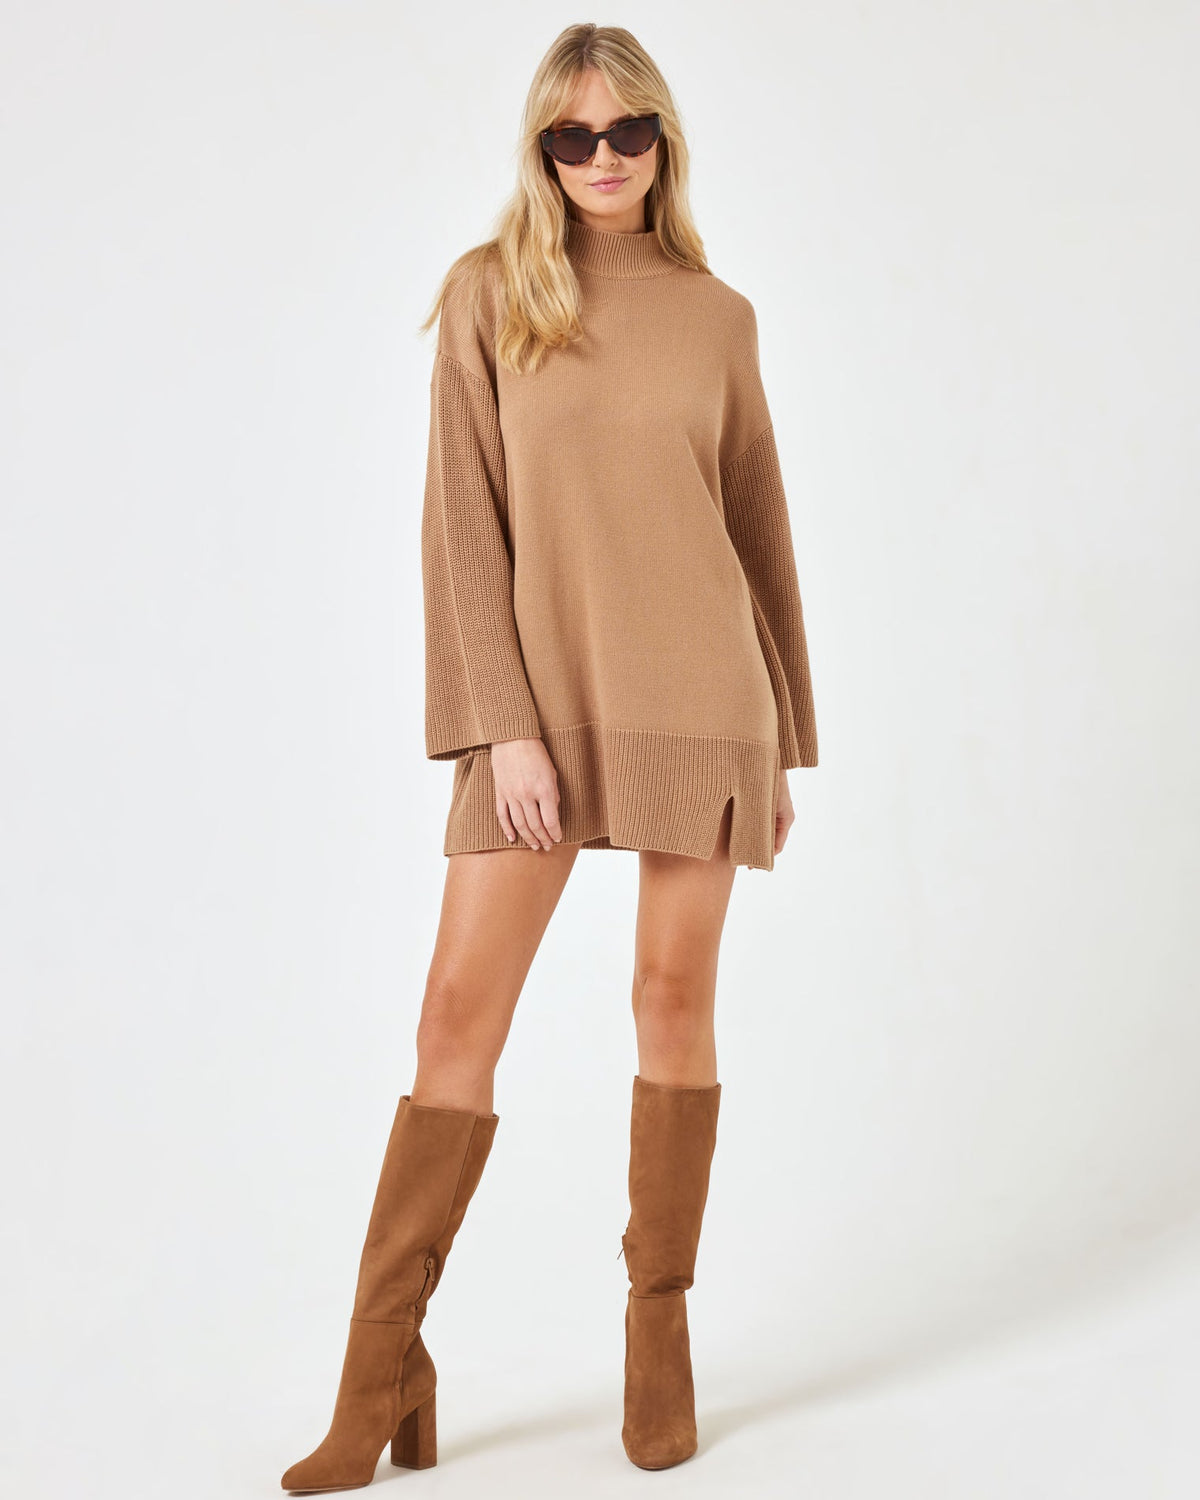 Lacy Dress Camel | Model: Lura (size: S)